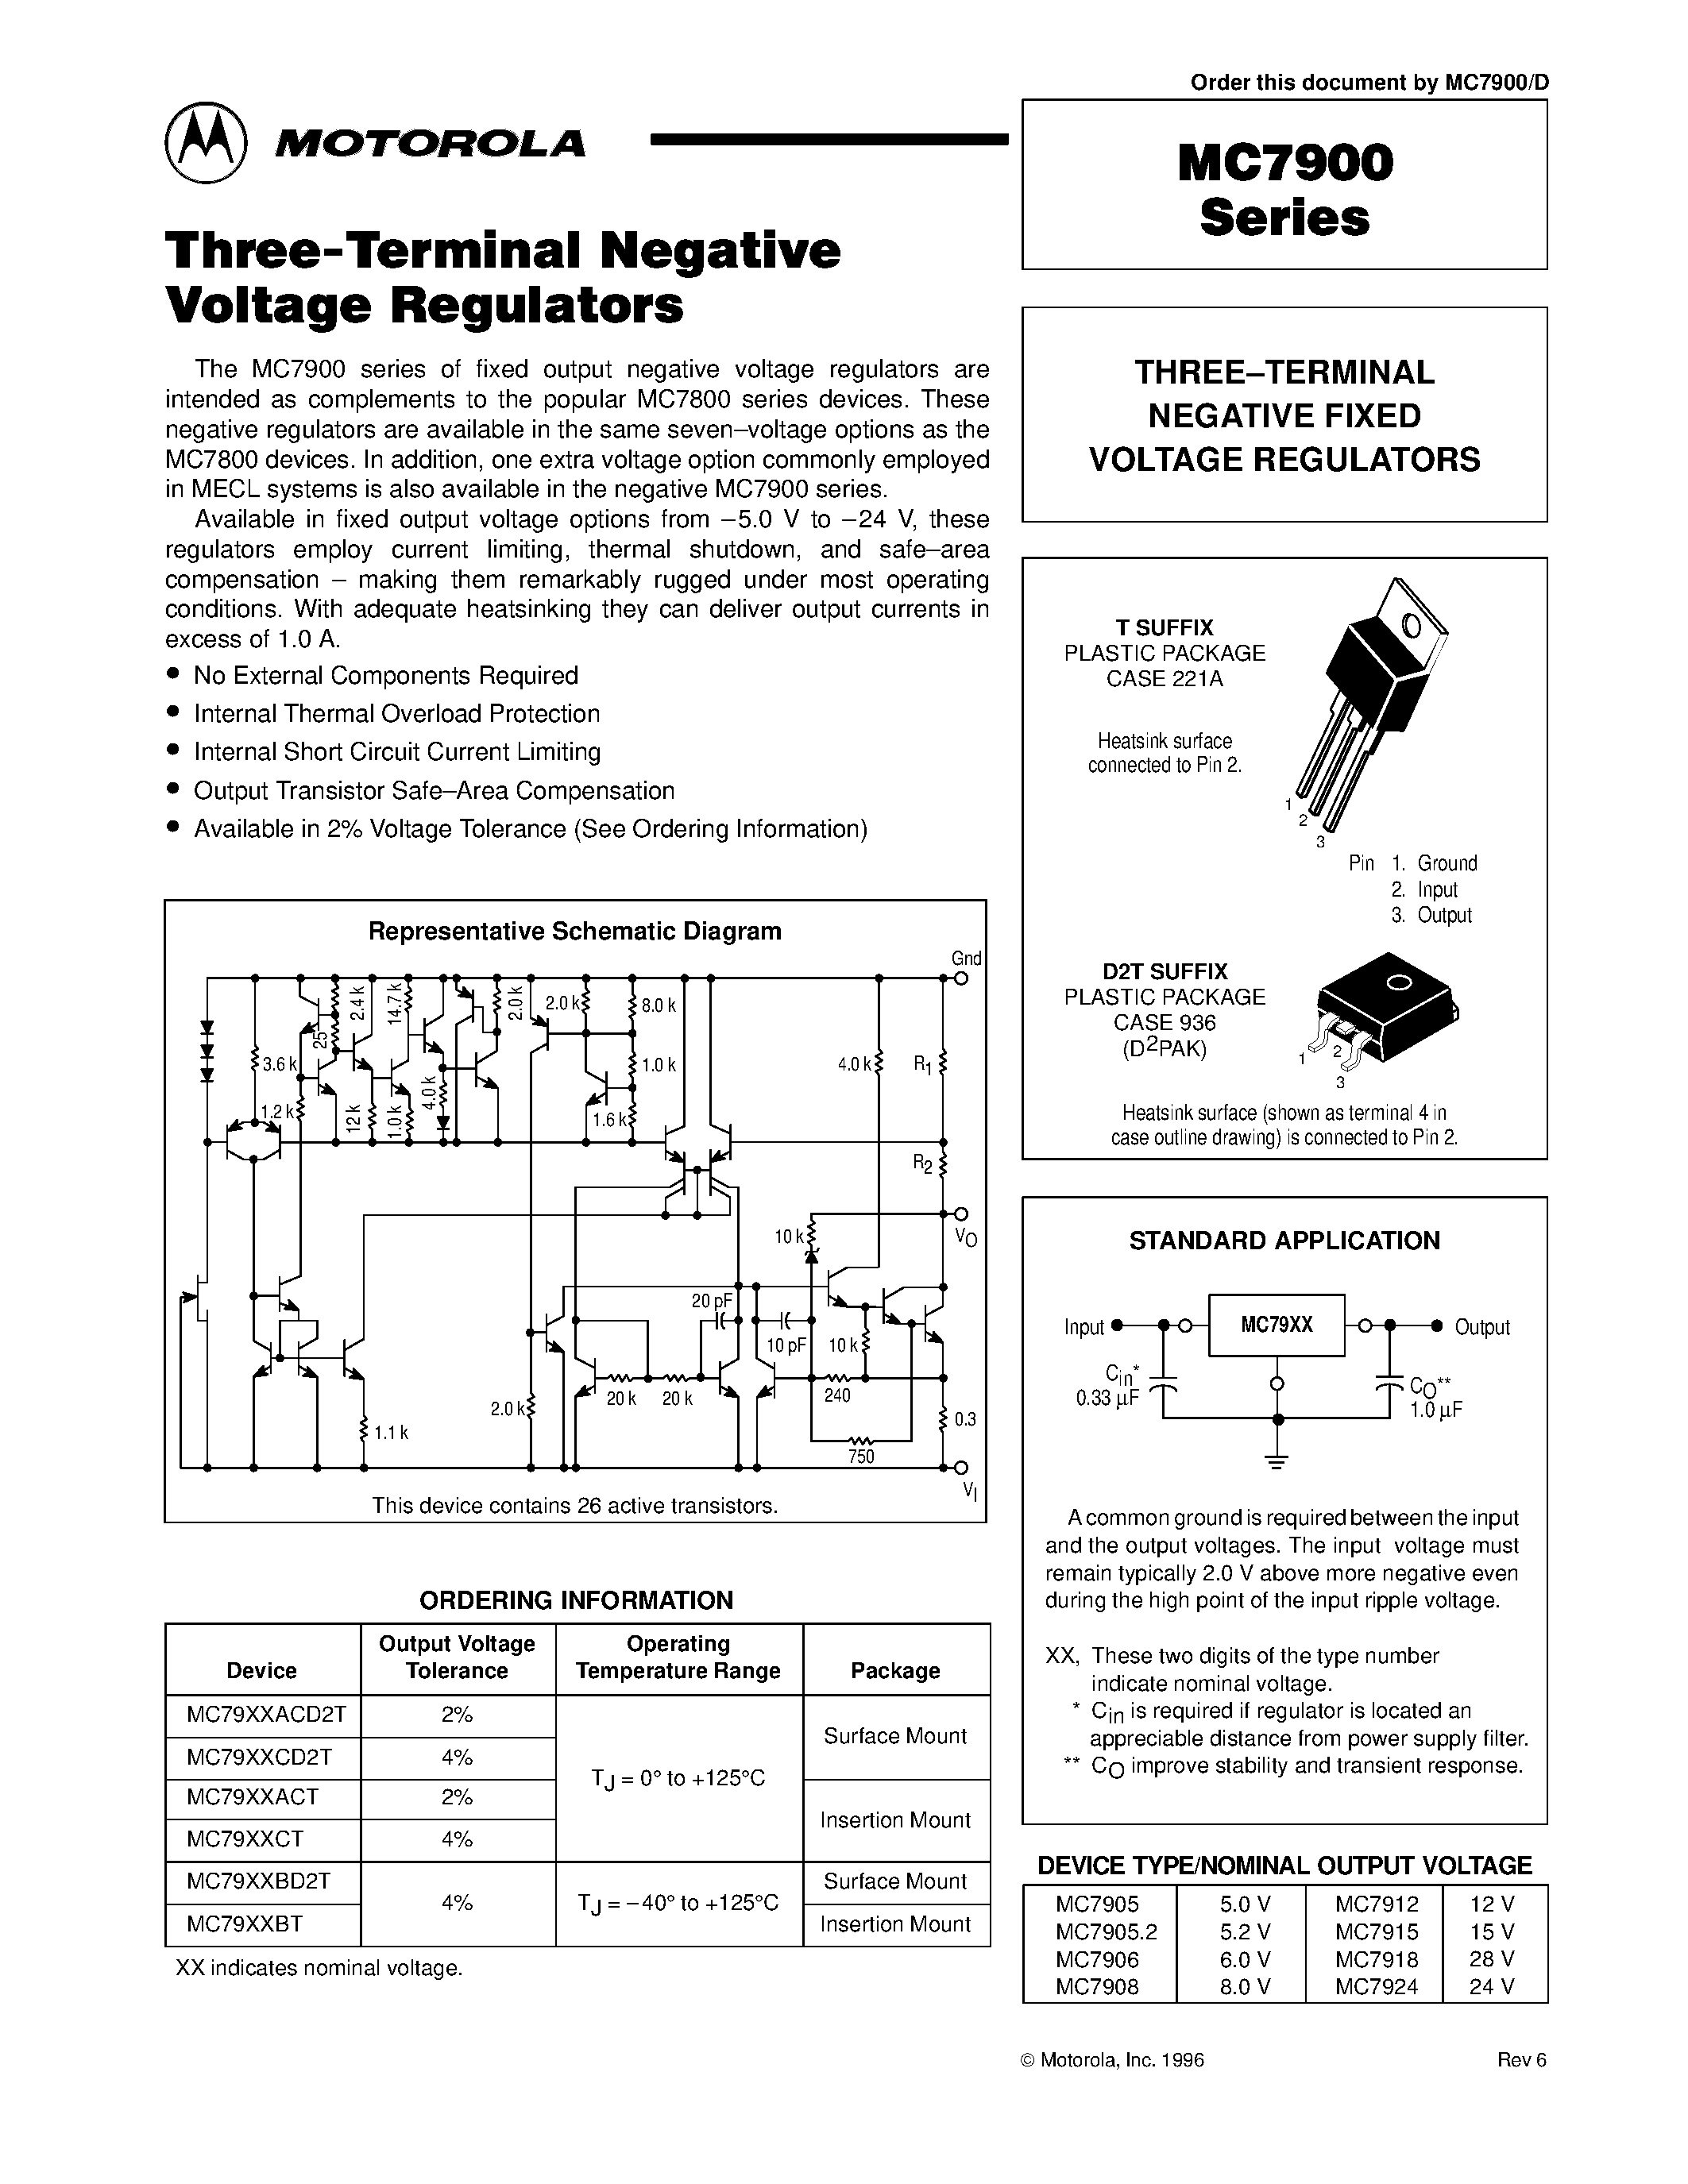 Datasheet MC7905CD2TR4 - THREE-TERMINAL NEGATIVE FIXED VOLTAGE REGULATORS page 1